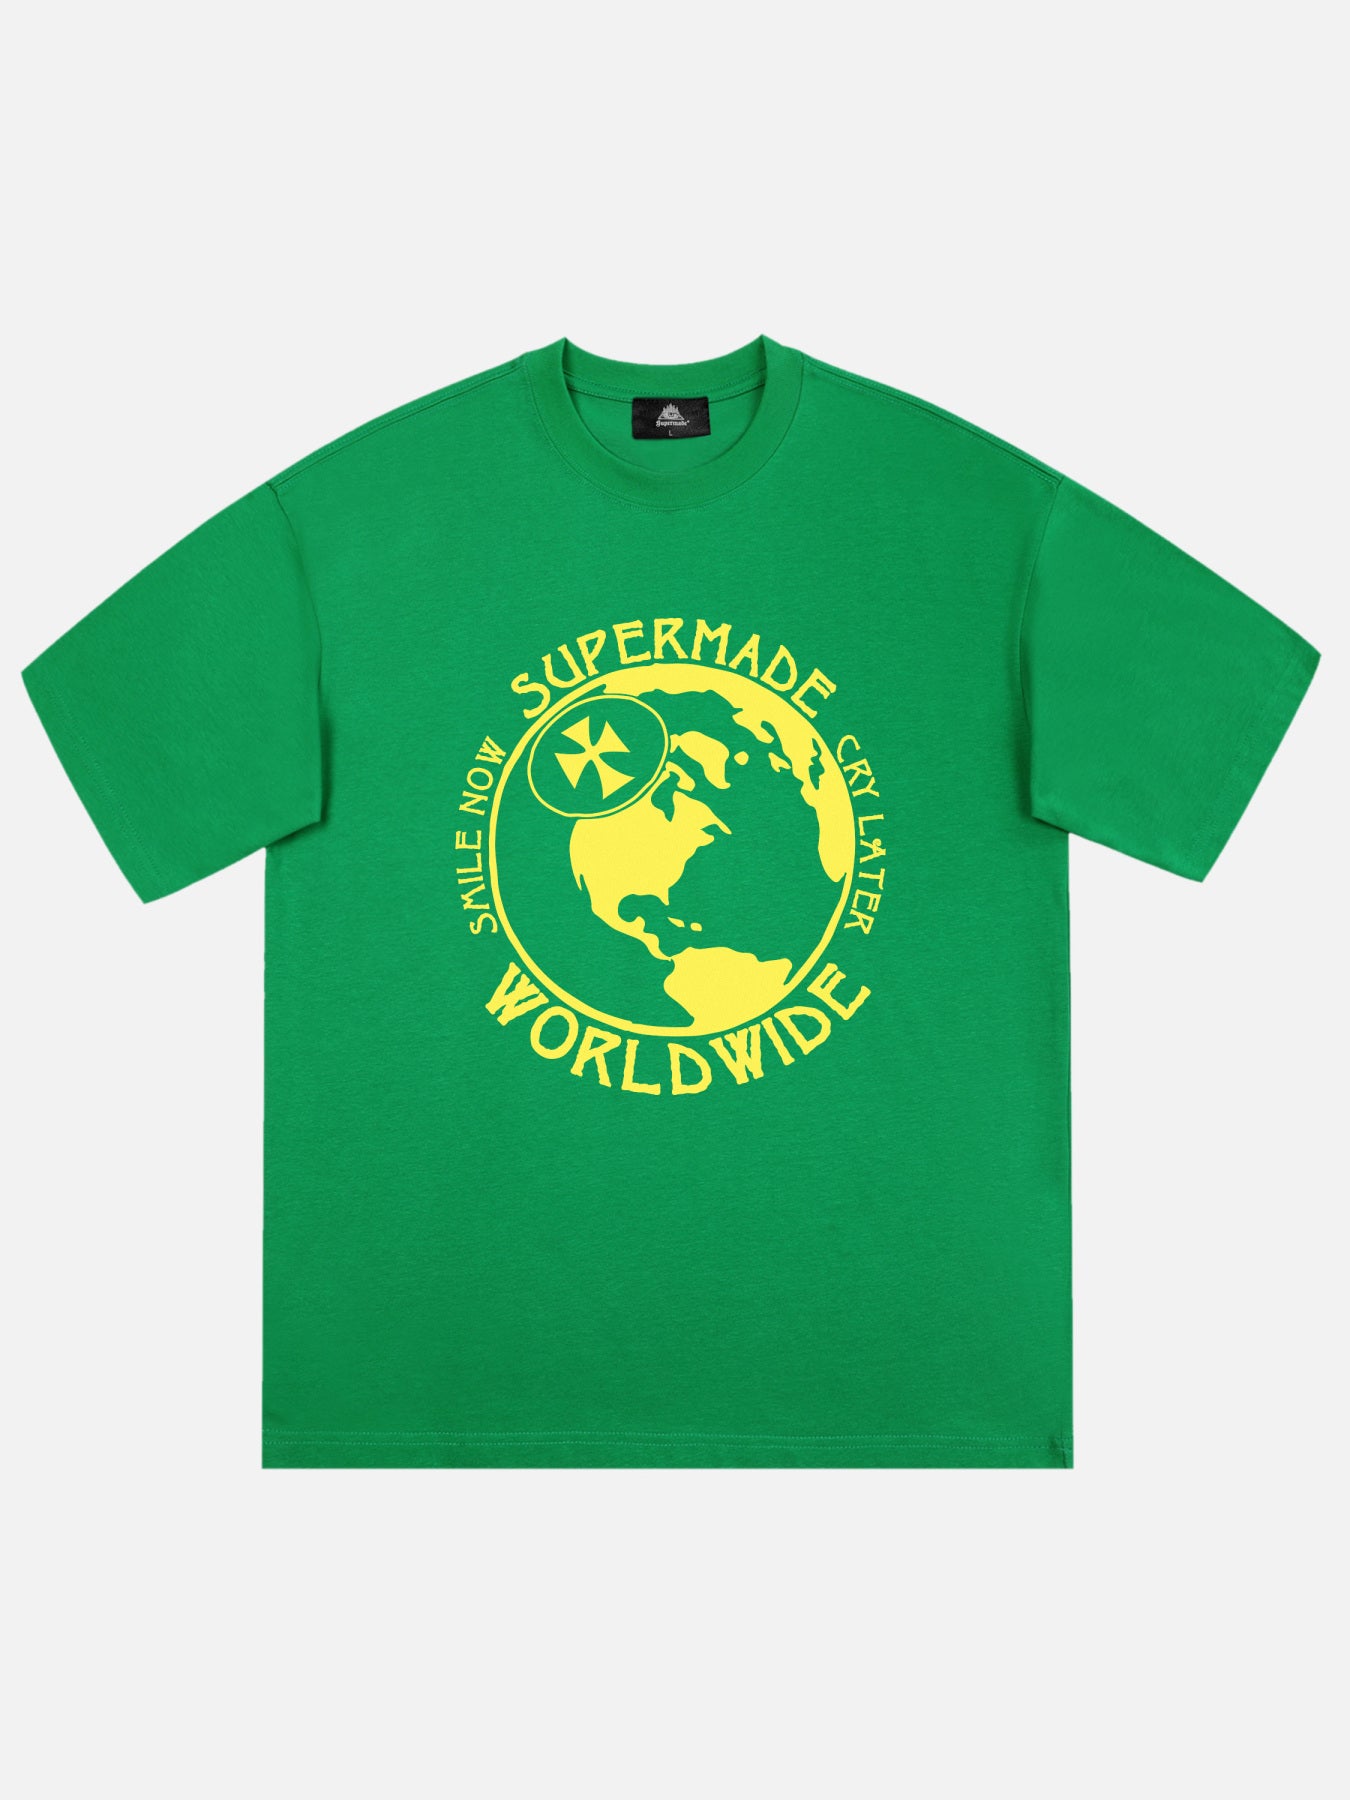 The Supermade Globe Print T-shirt